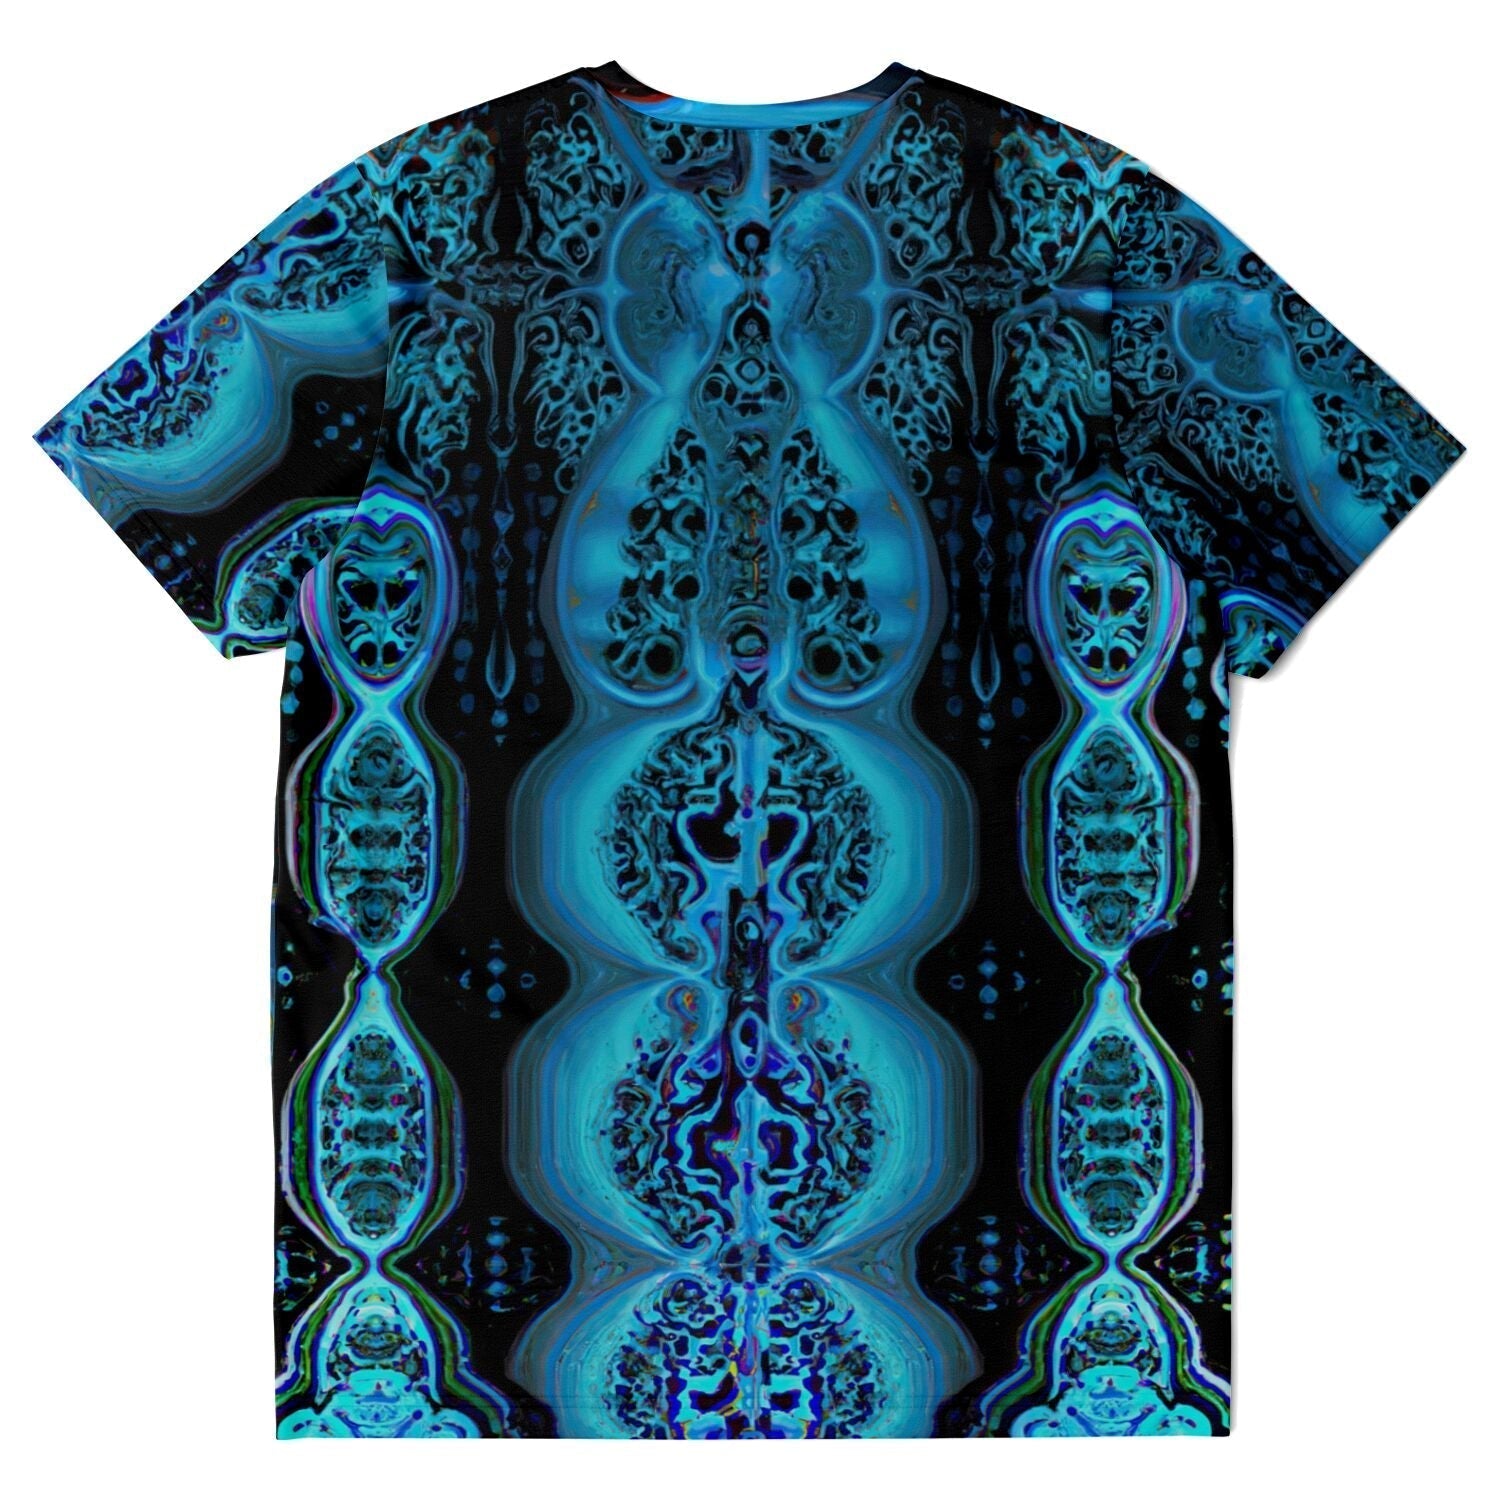 T-shirt XS Stoned Ape Theory | Psychedelic Evolution | DMT, LSD, Ayahuasca, McKenna | Trippy Digital Art T-Shirt